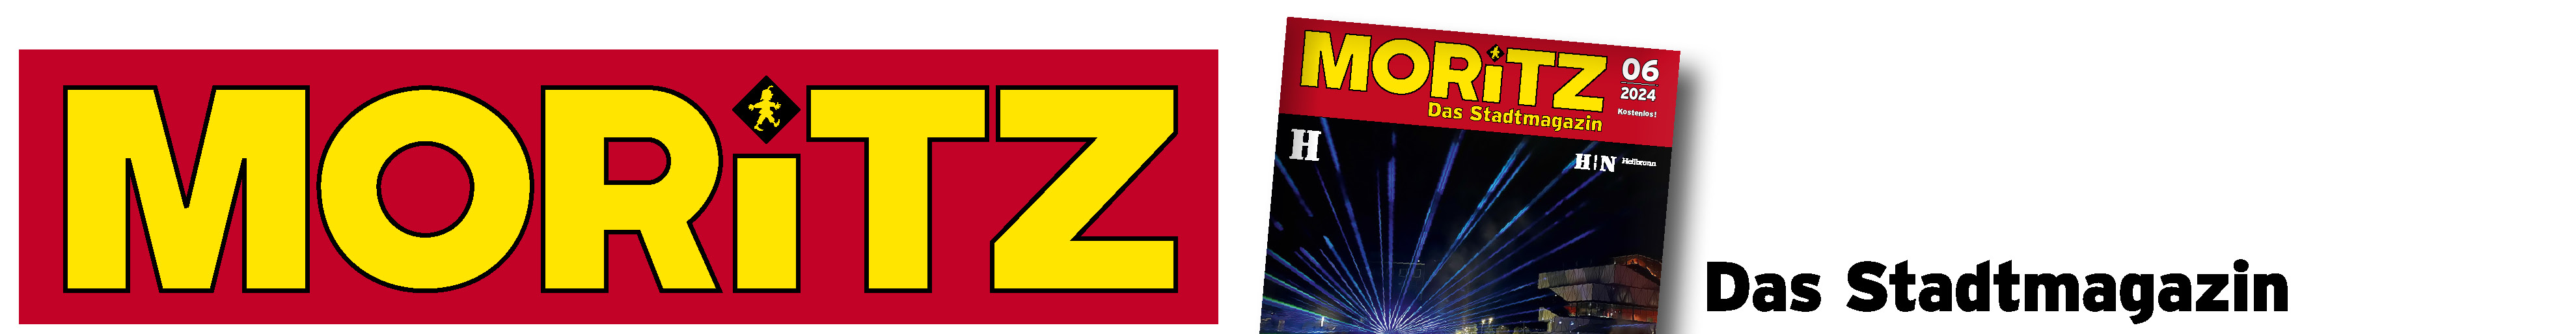 MORITZ Stadtmagazin –> Veranstaltungen, Konzerte, Partys, Bilder